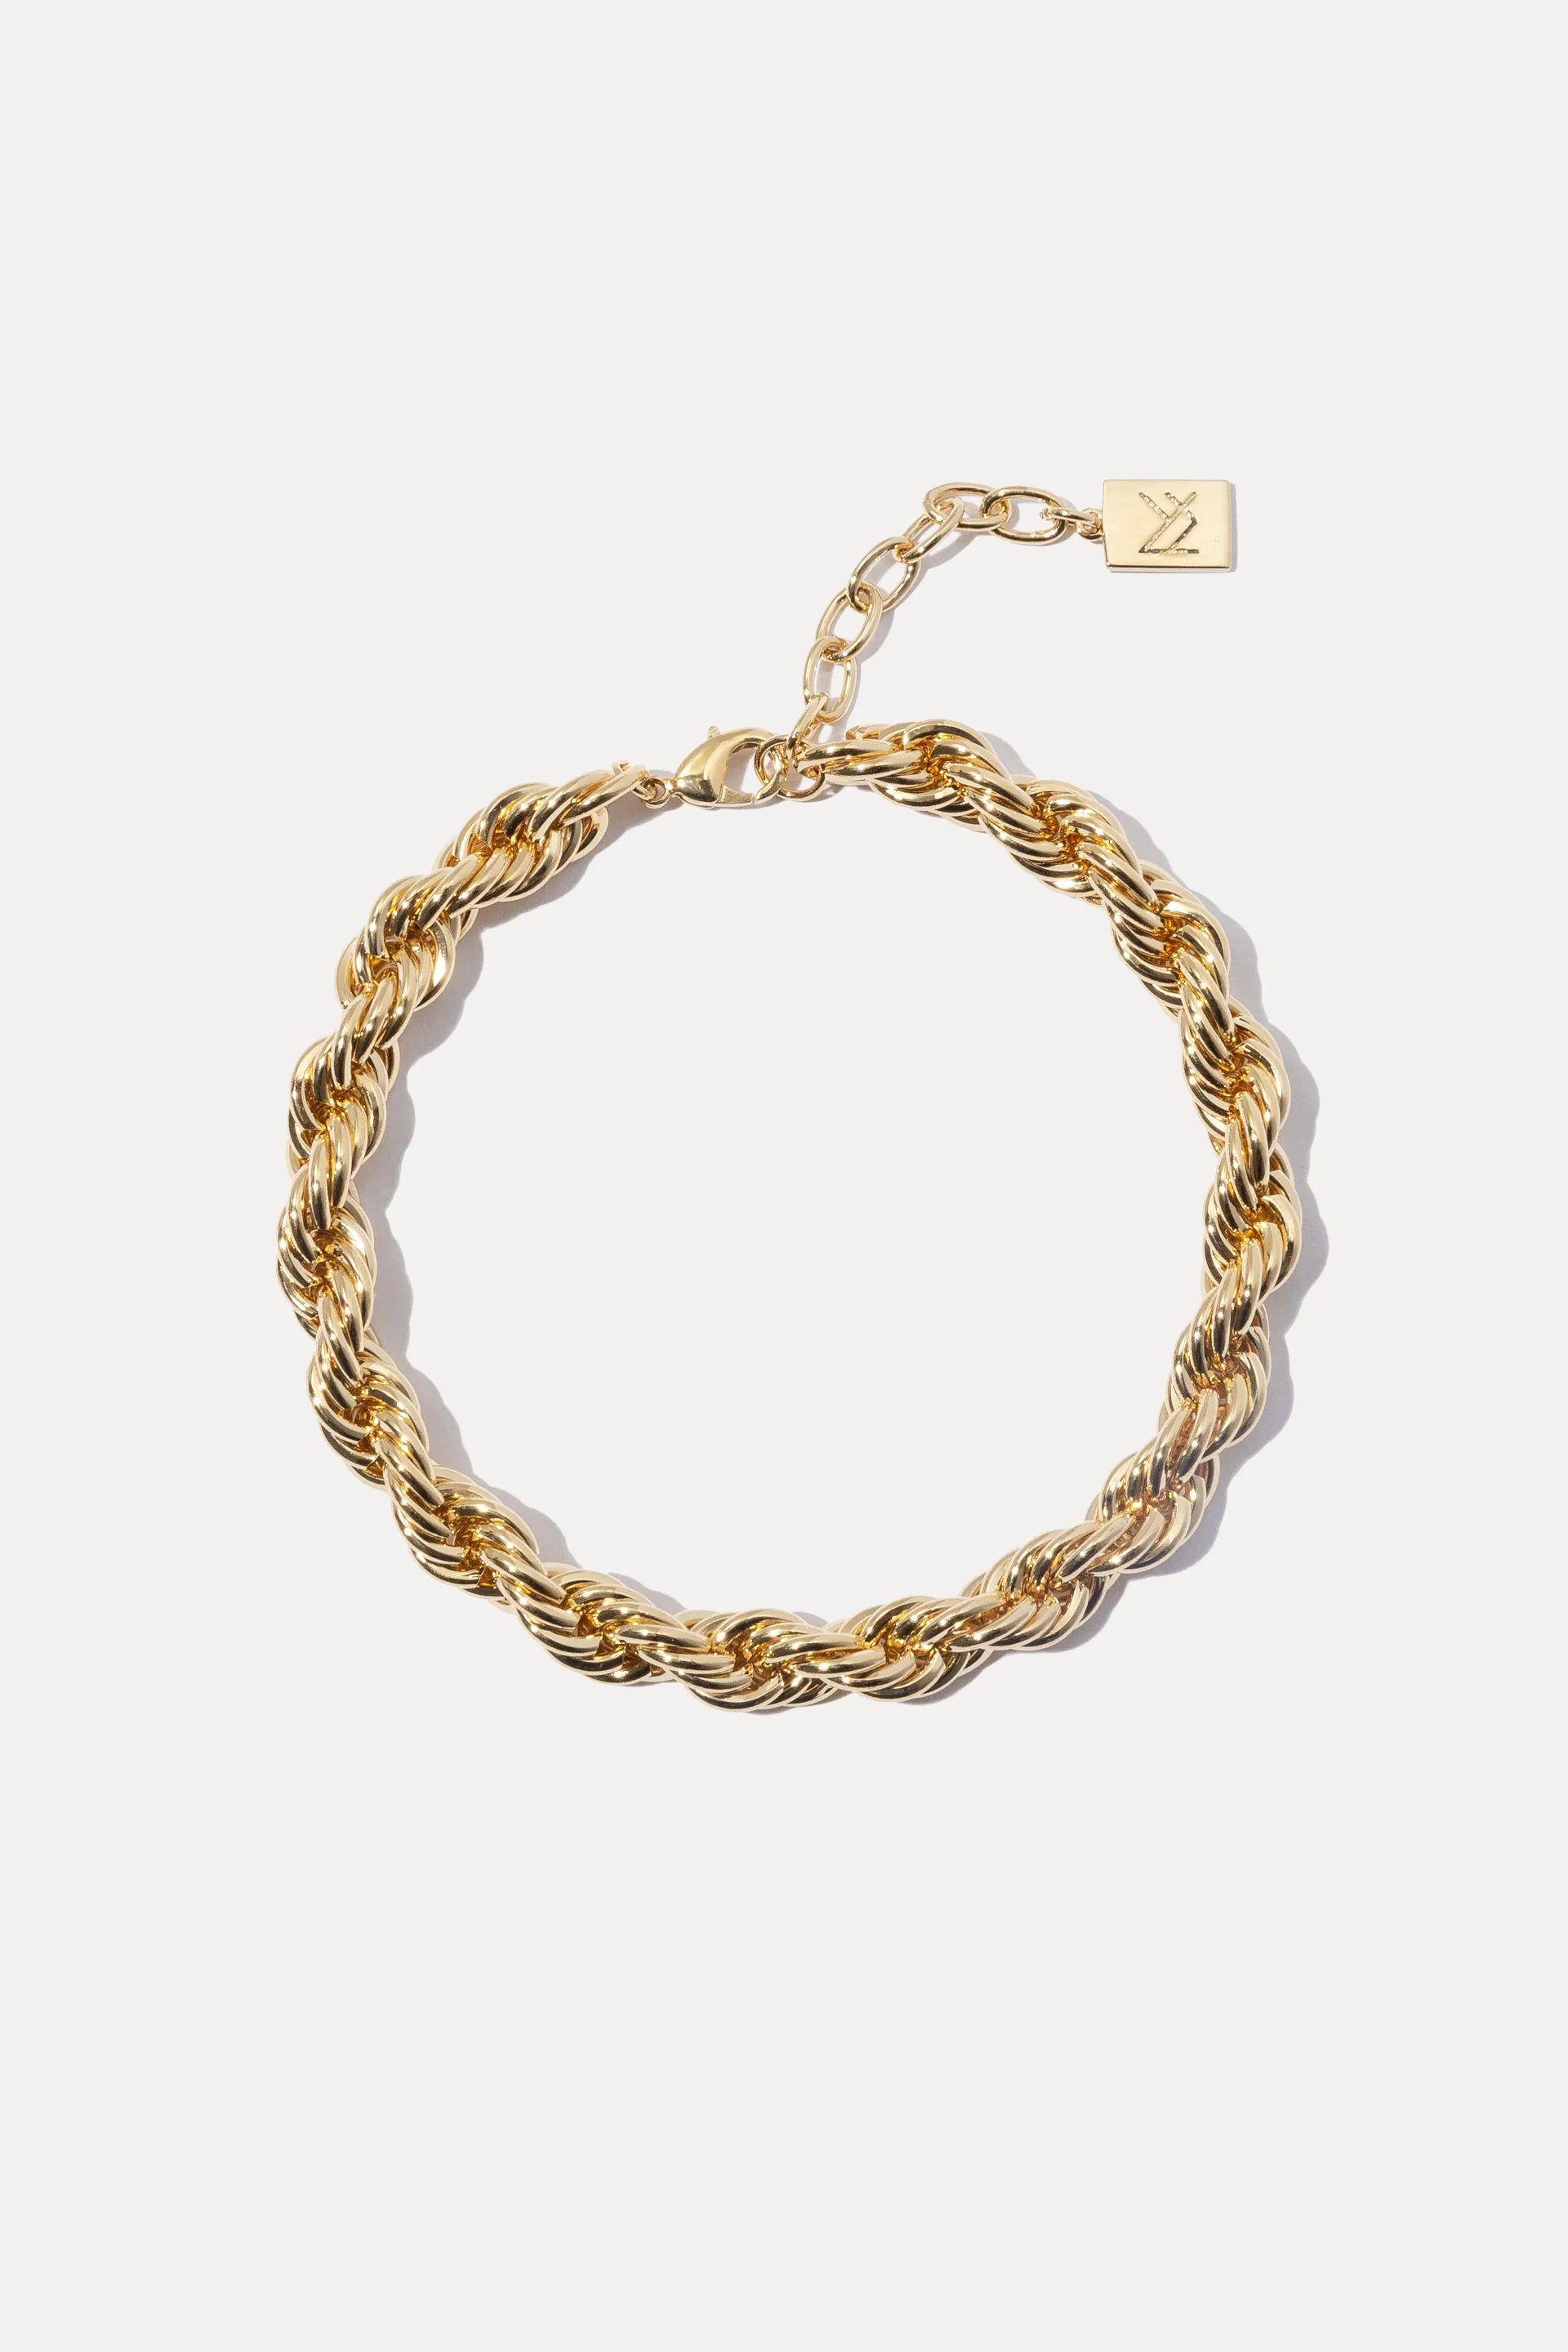 Sloane Bracelet | Miranda Frye Inc.